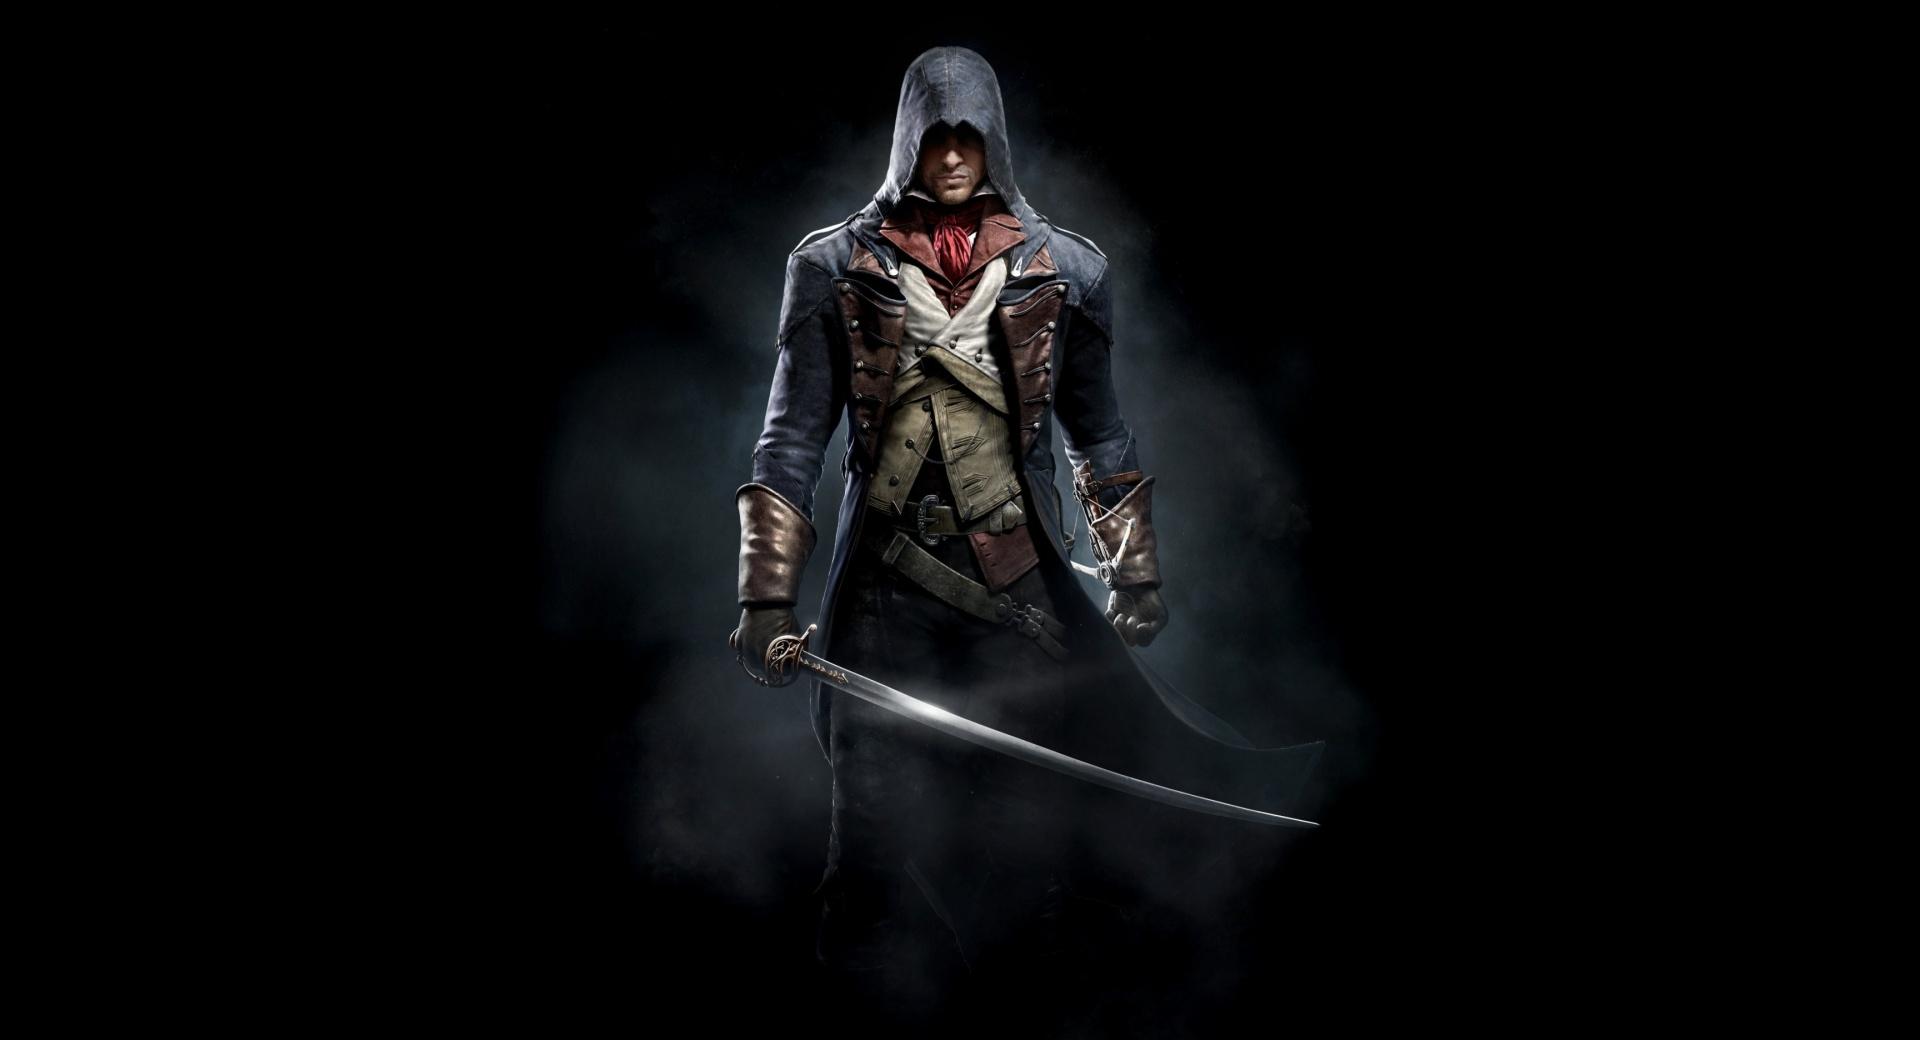 Assassins Creed Unity Arno 4k HD at 1024 x 1024 iPad size wallpapers HD quality